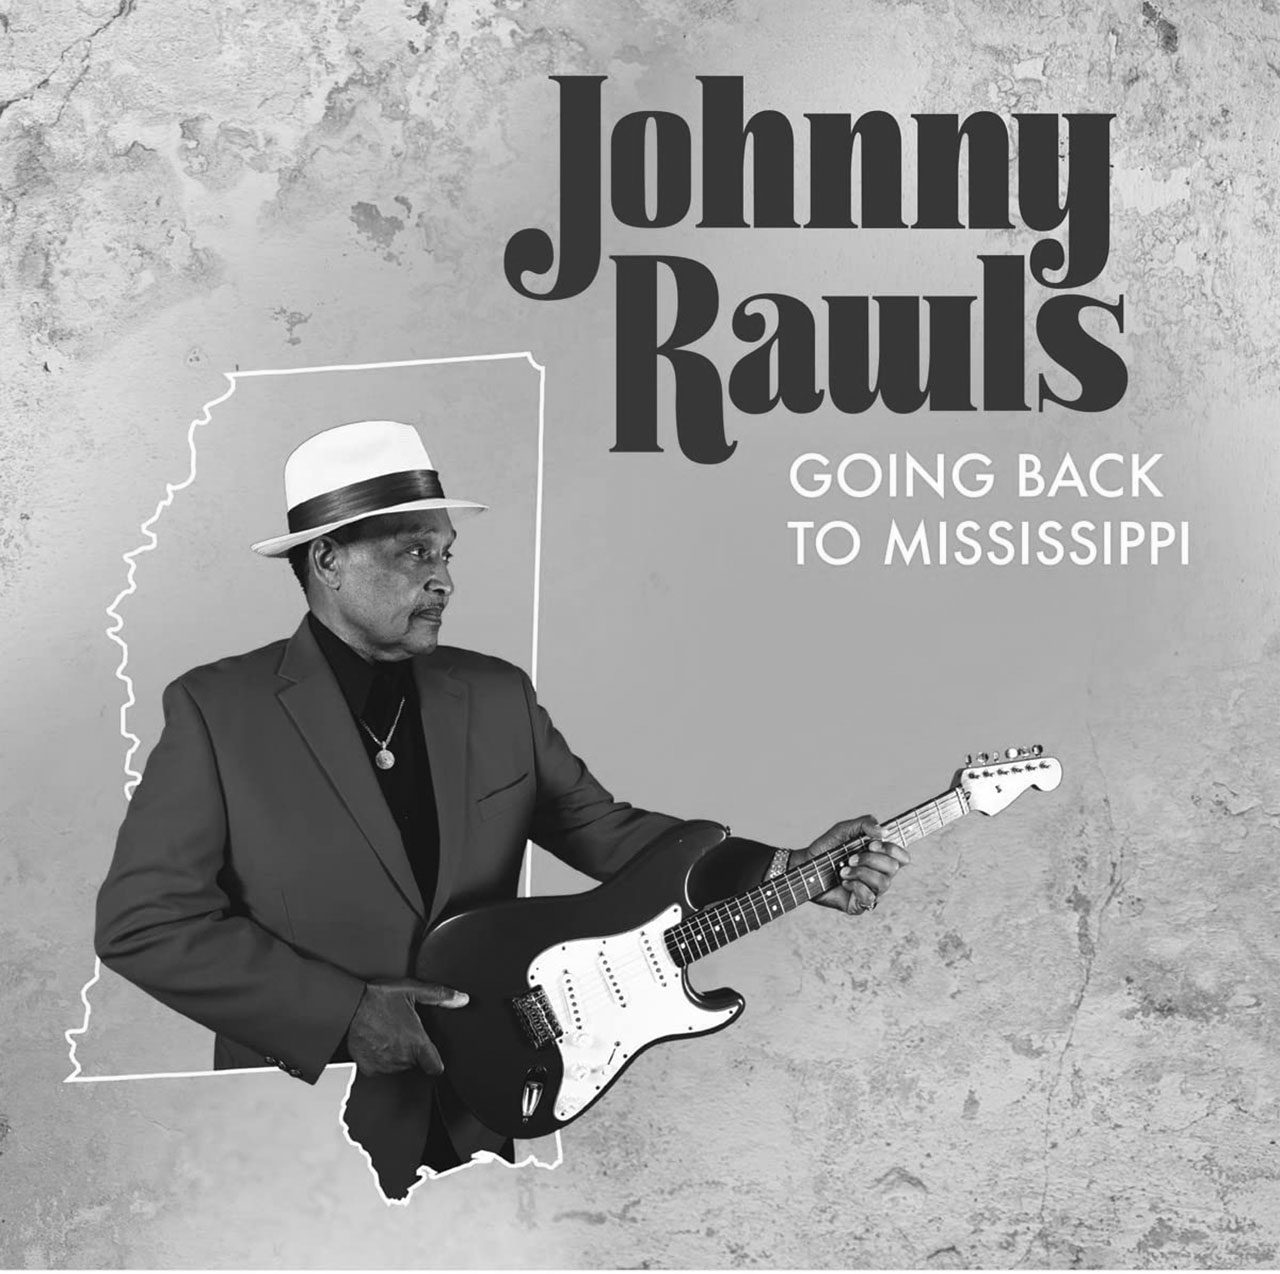 JOHNNY RAWLS: "Going Back To Mississippi" cover album